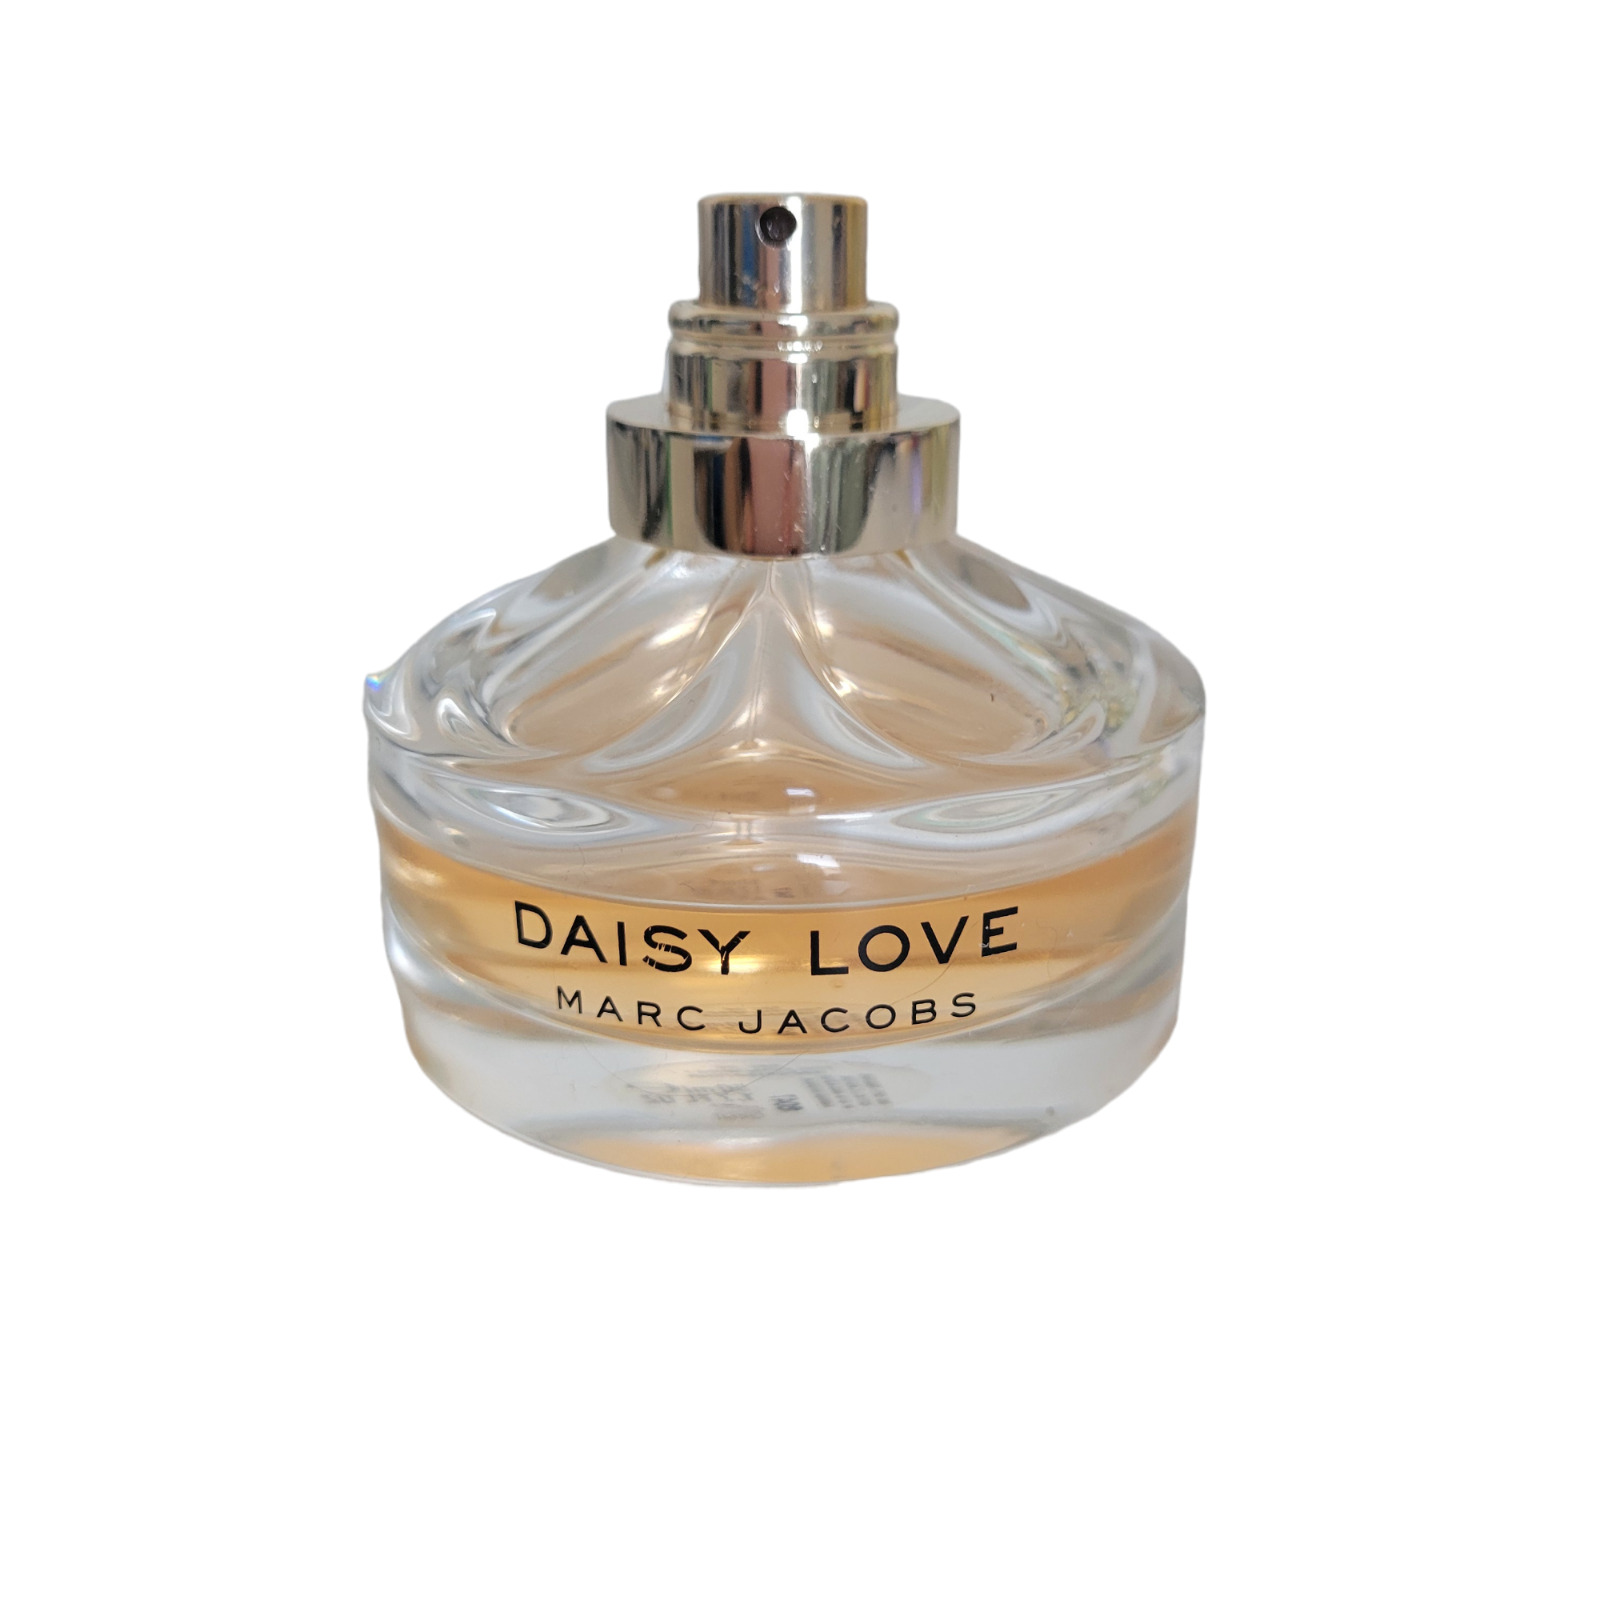 Daisy Love by Marc Jacobs for Women 1.7 oz Eau de Toilette Spray 60% Full No Cap